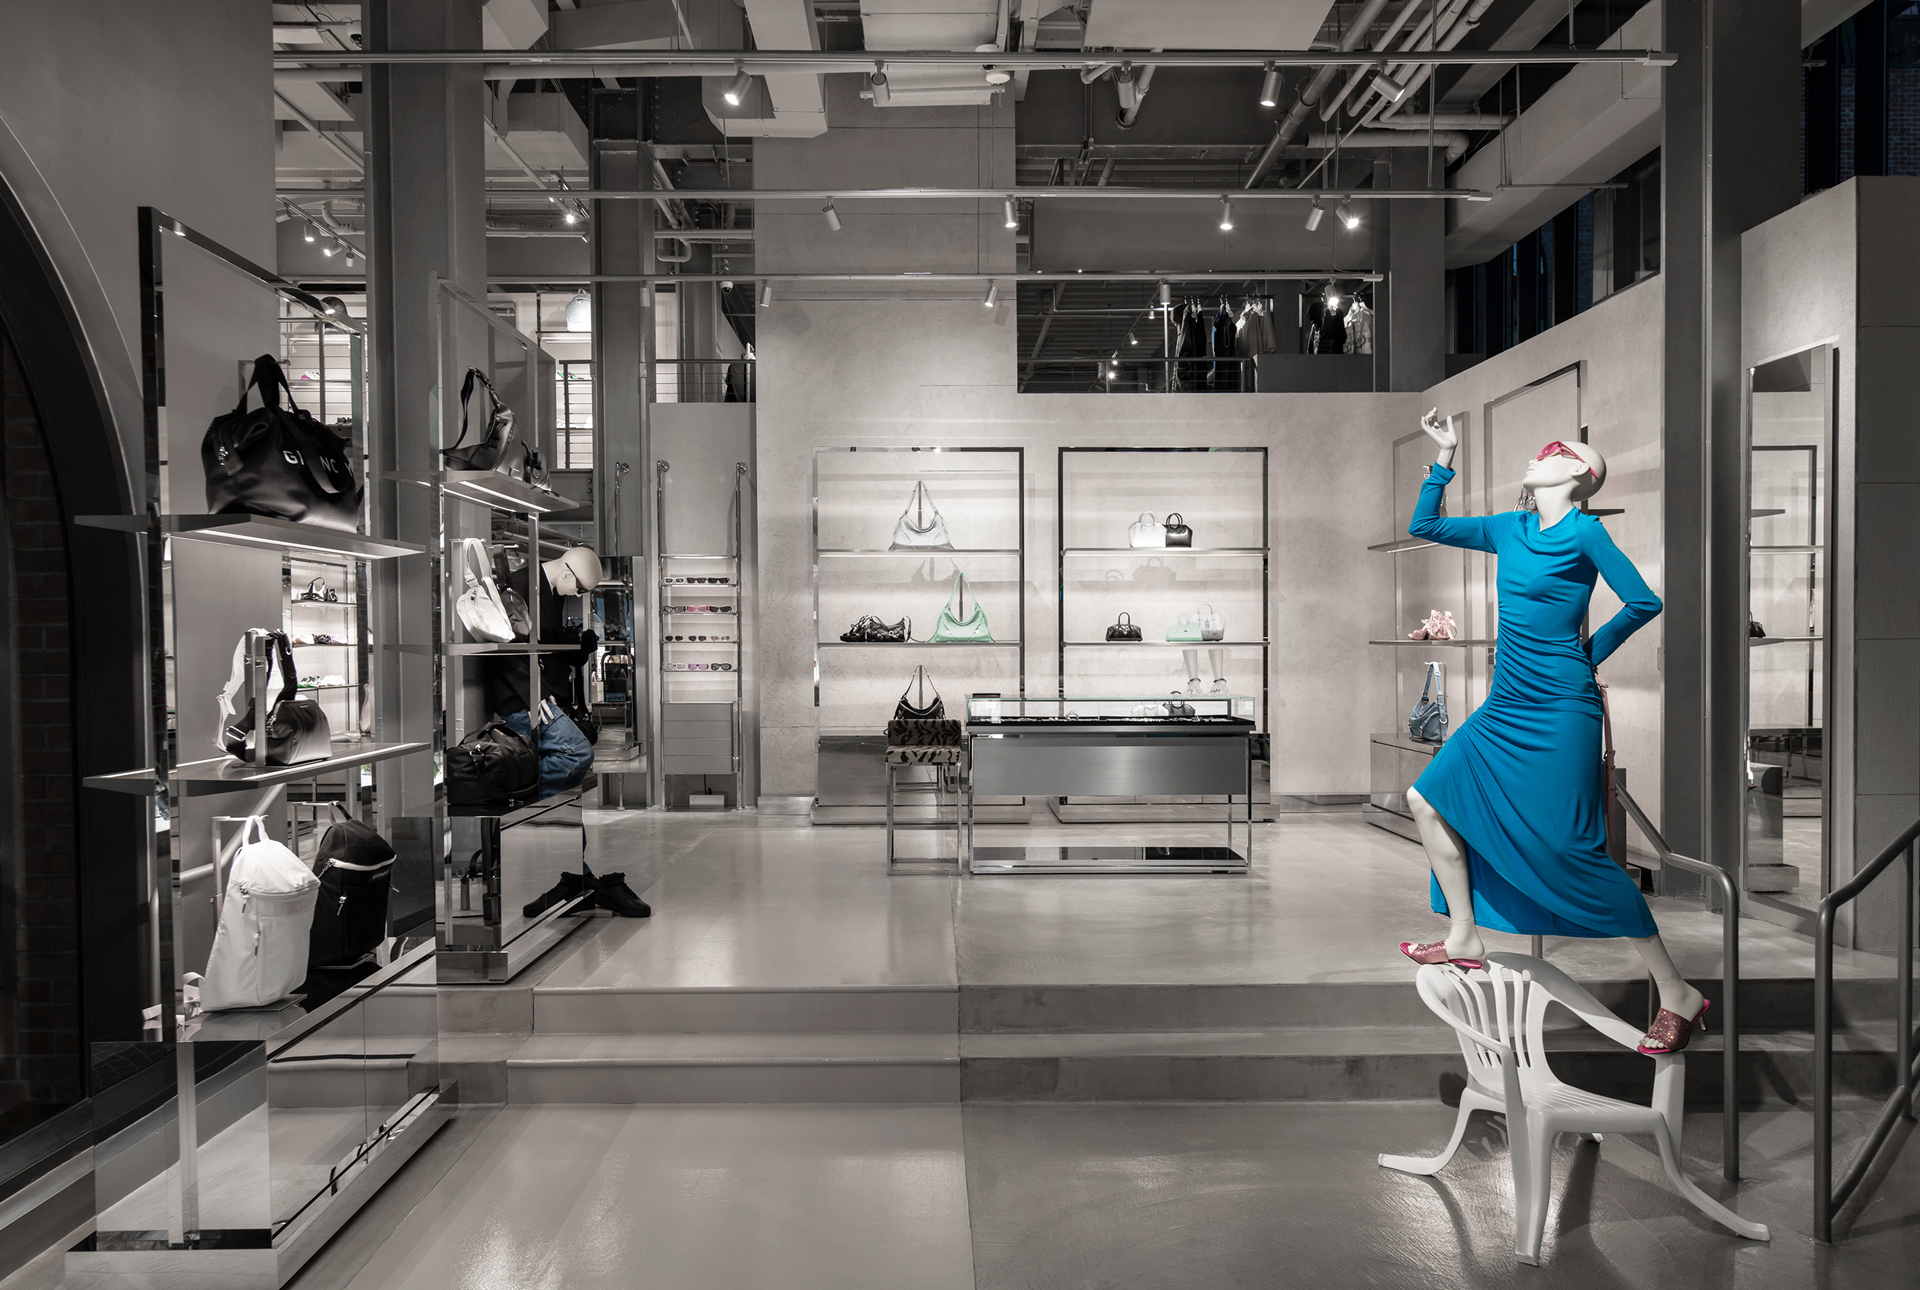 Louis Vuitton's First California Men's Store Lands in Beverly Hills